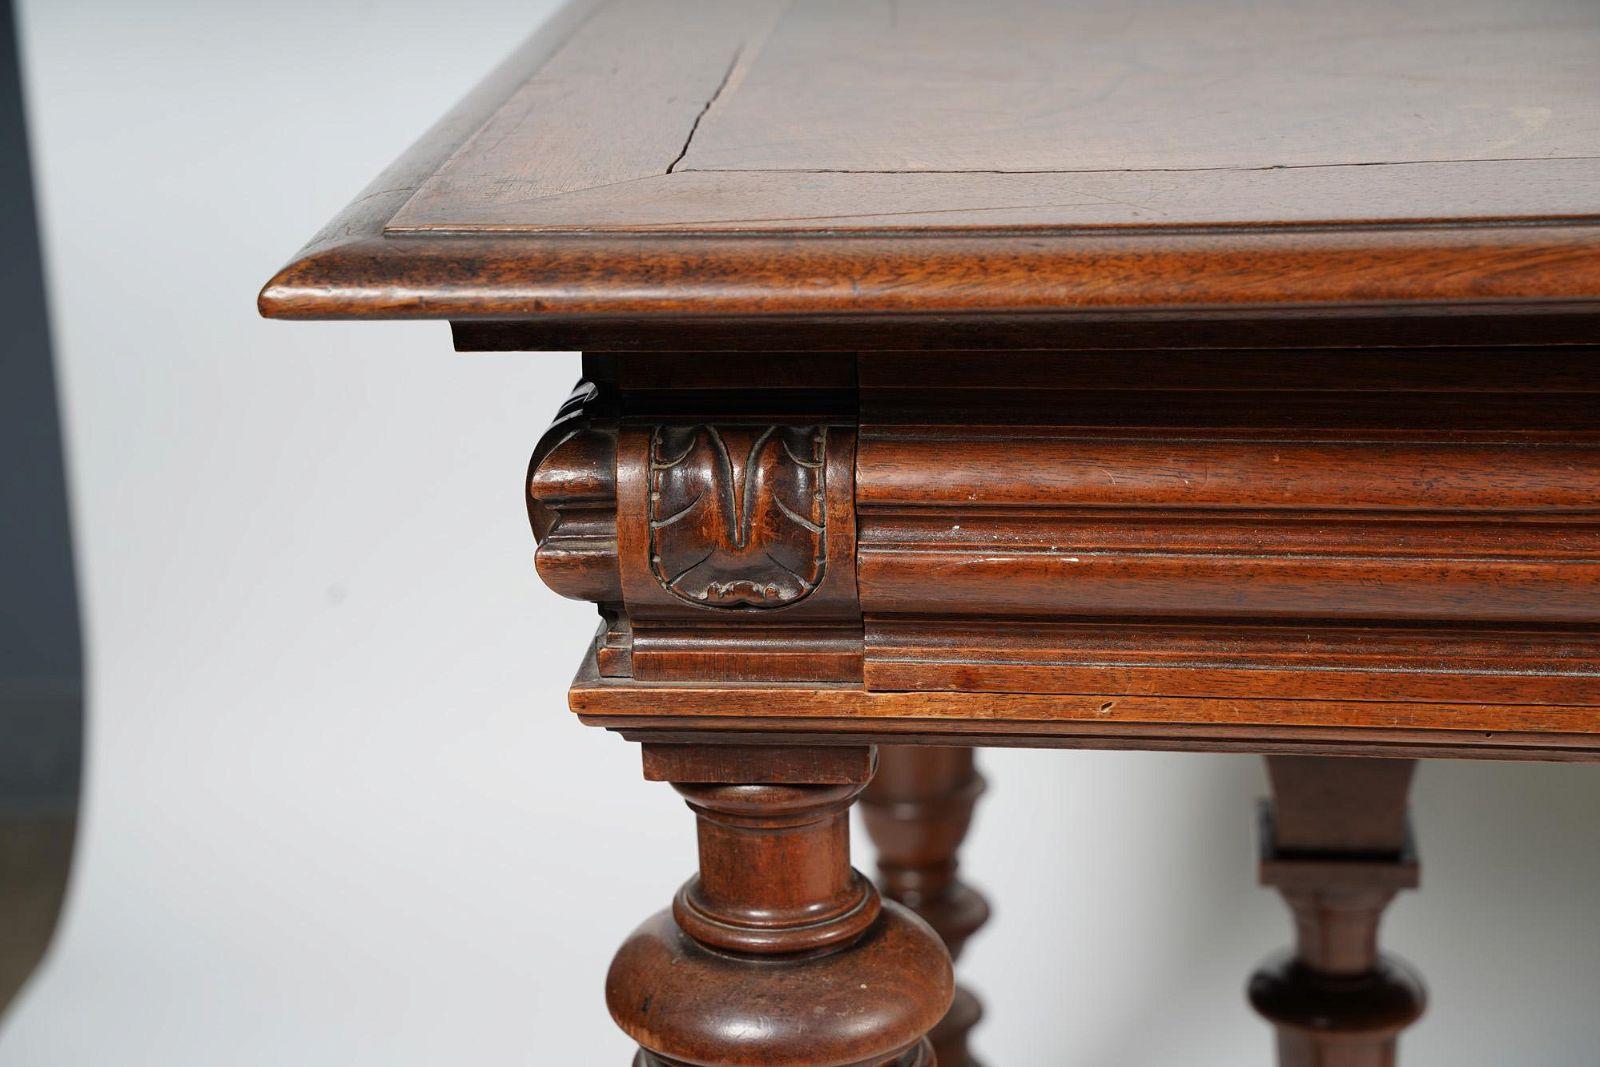 Antique American Renaissance Revival Walnut Library Table Desk Mid 19th Century For Sale 4